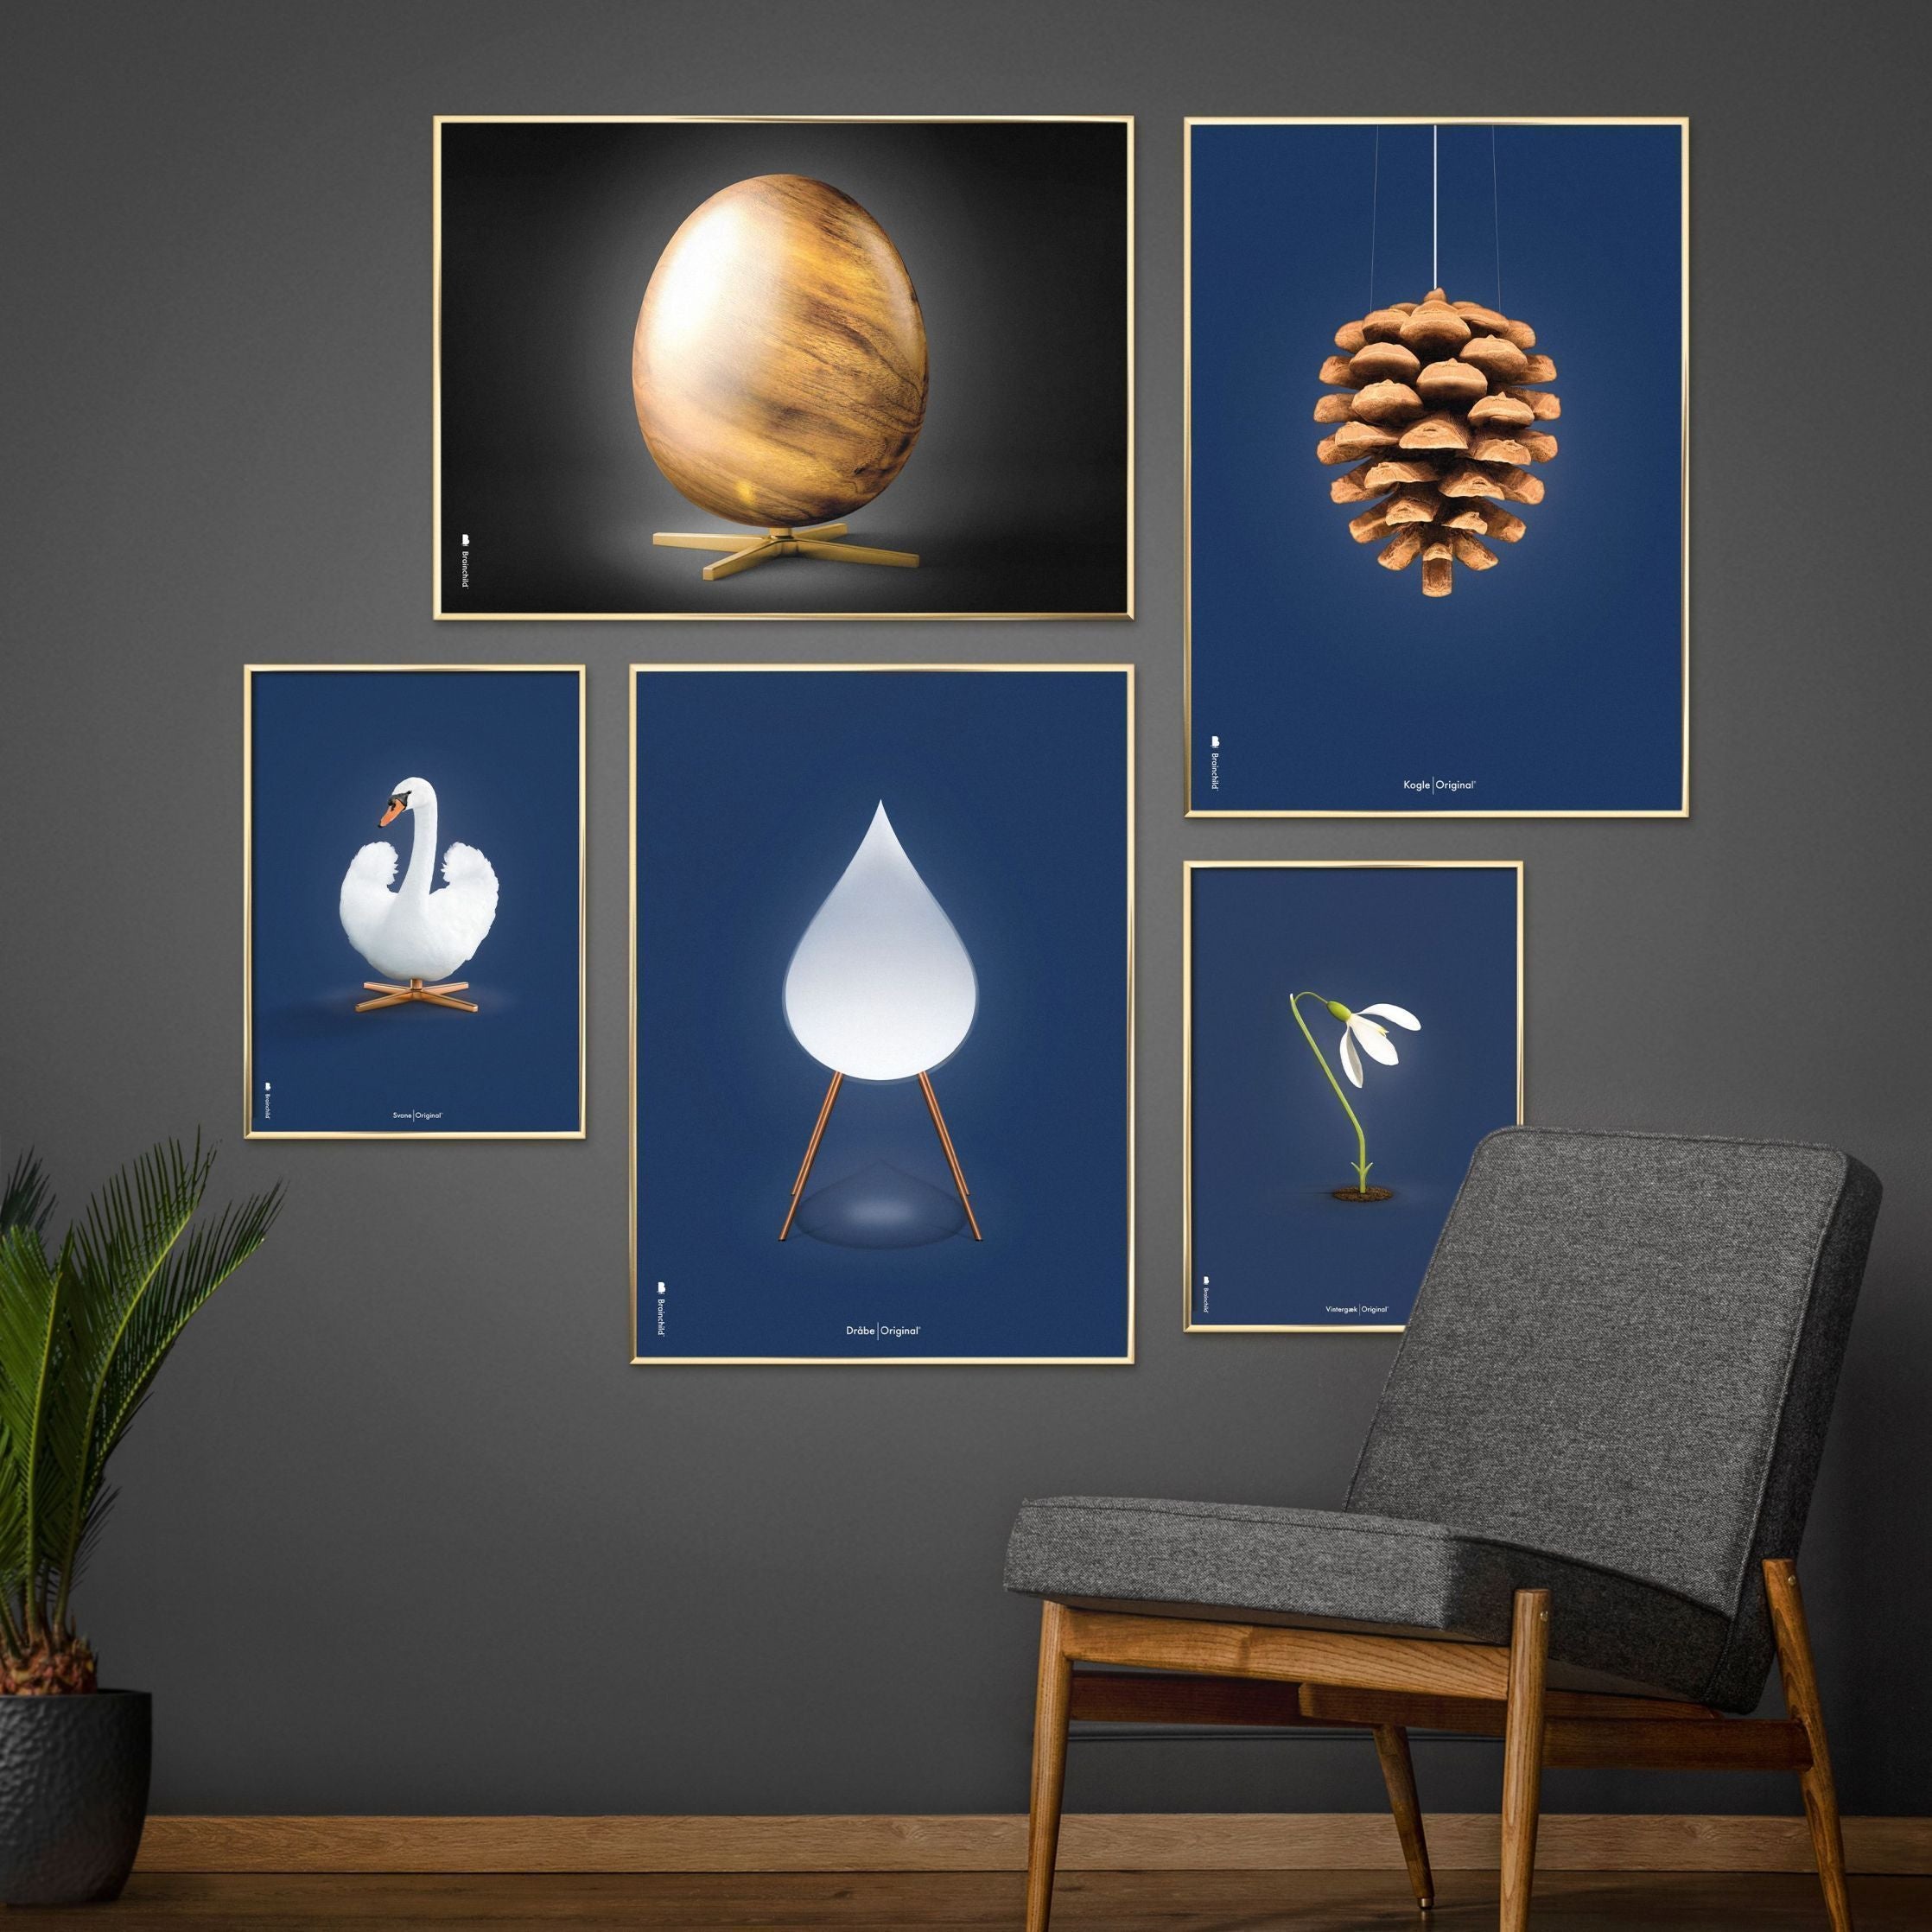 Brainchild Drop Classic Poster, Frame Made Of Light Wood 30x40 Cm, Dark Blue Background